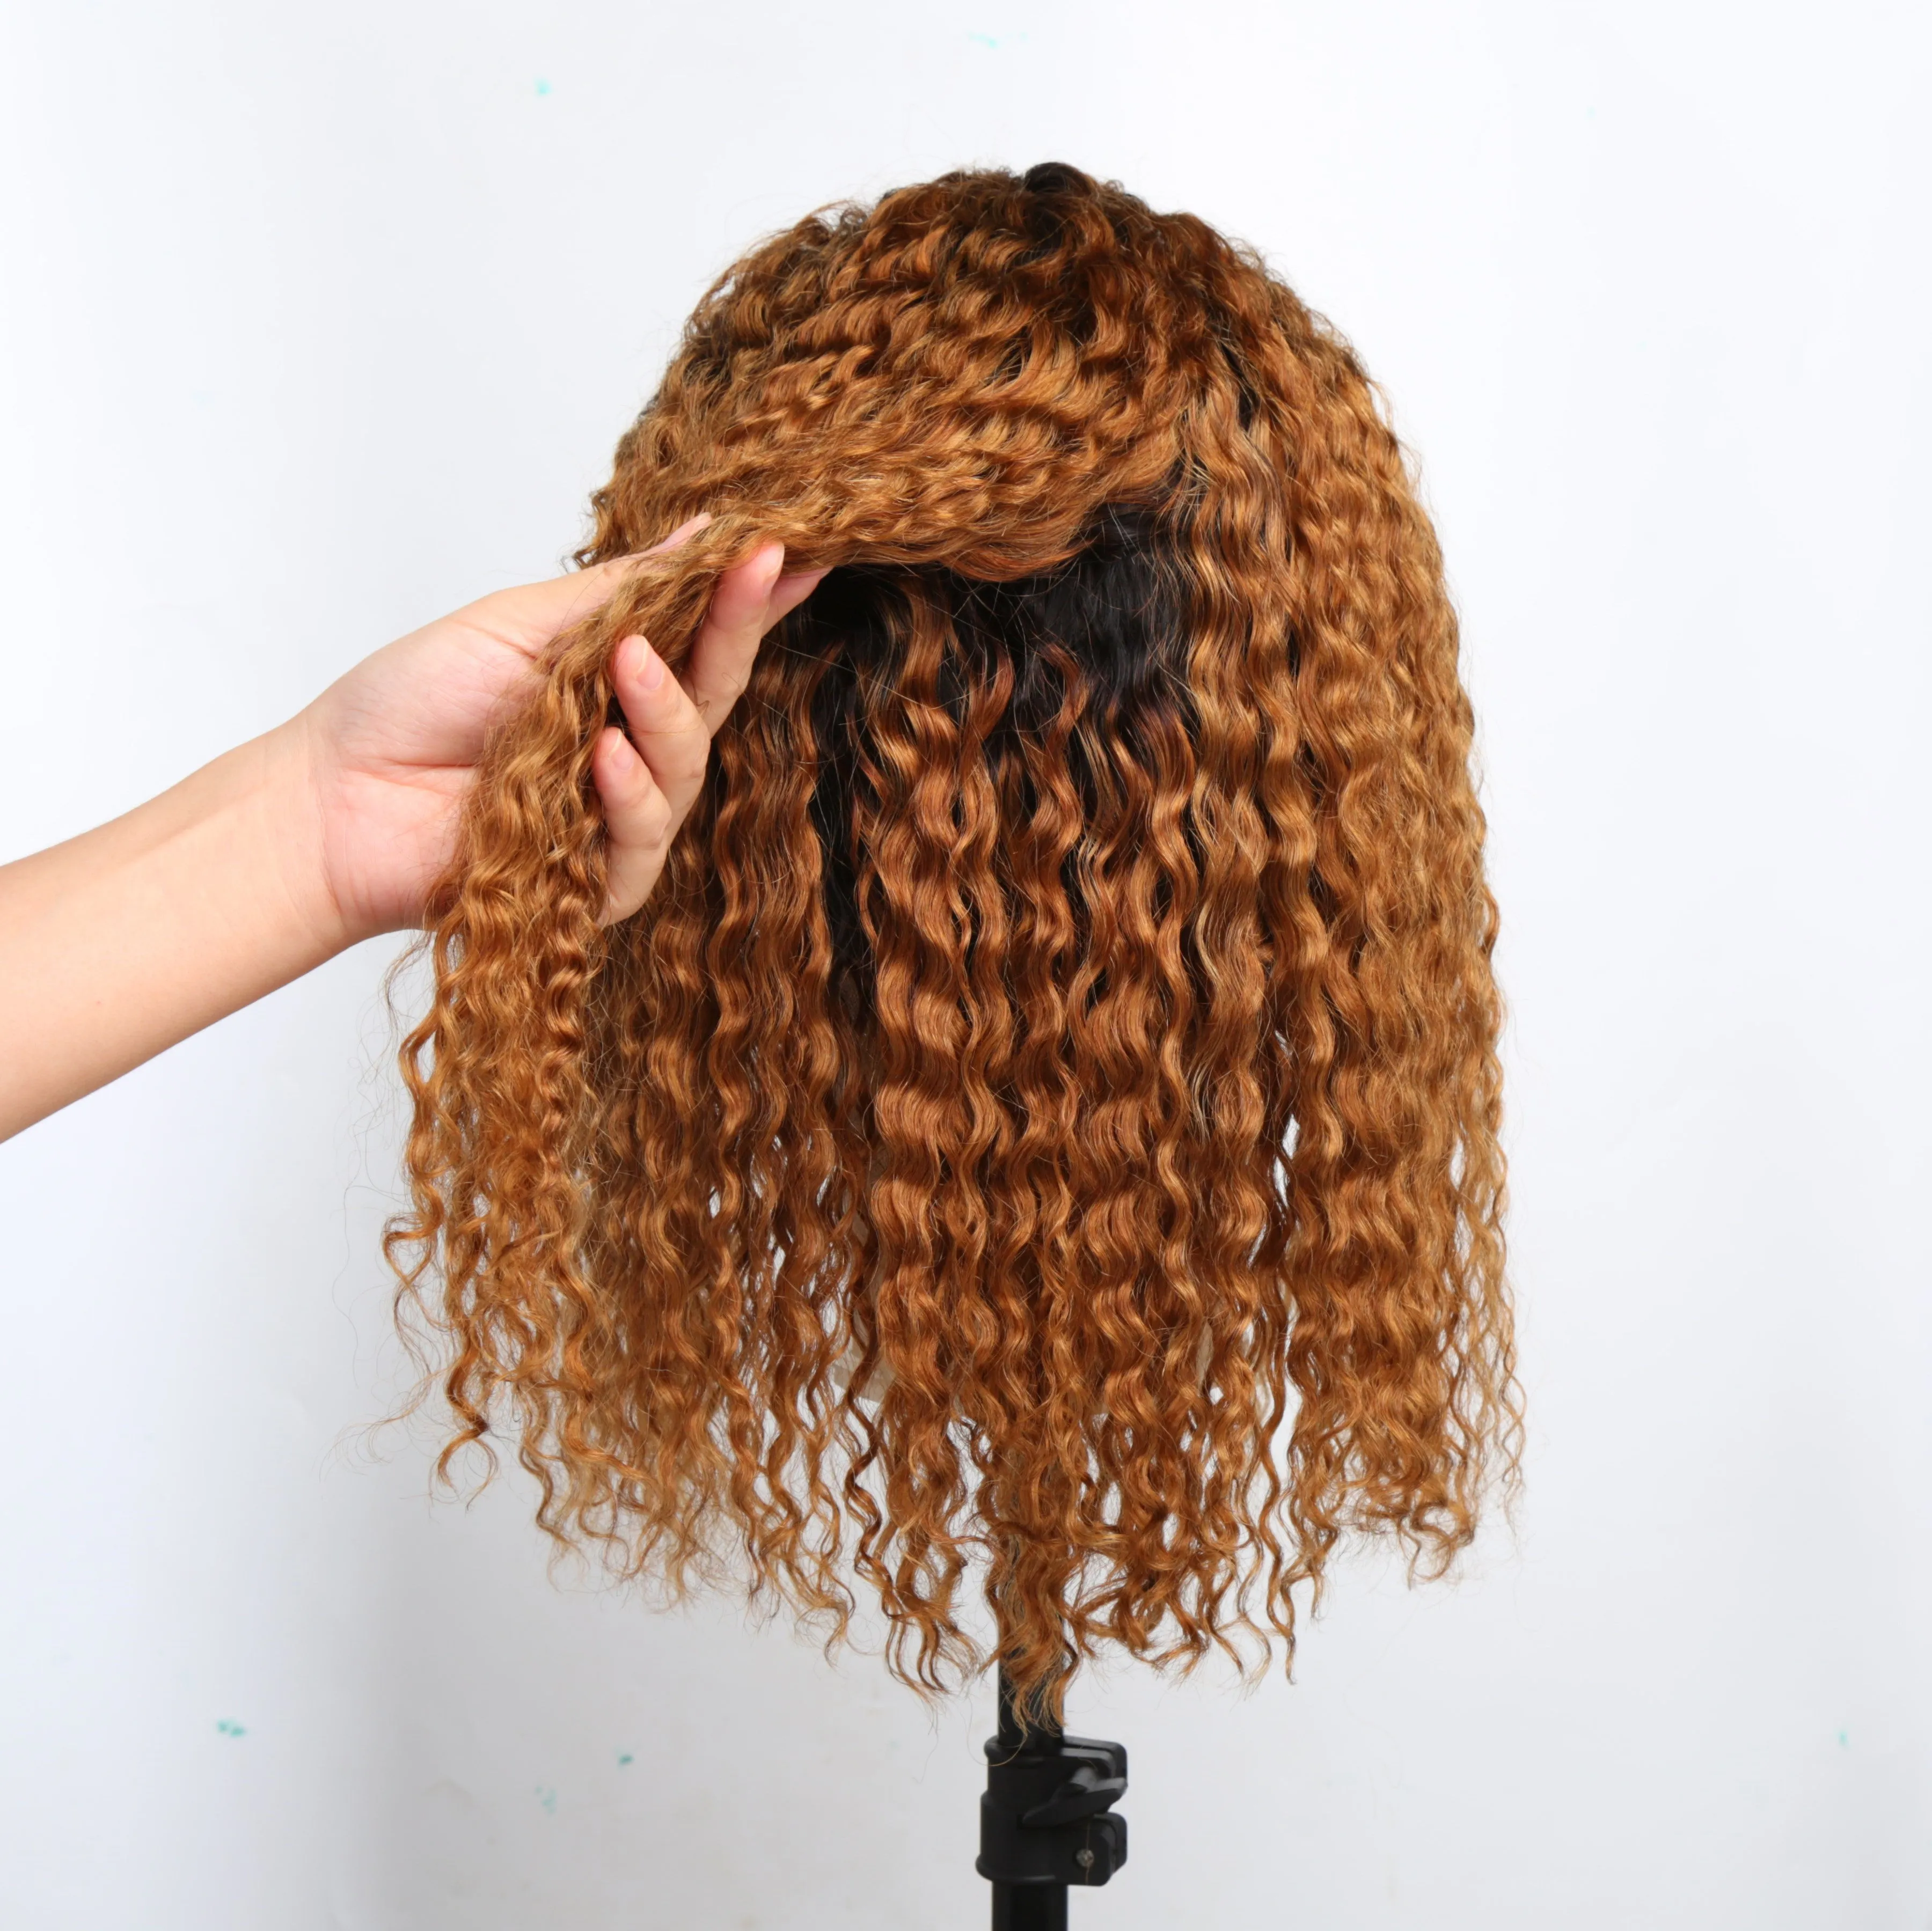 Ombre colorido frente do laço perucas de cabelo humano encaracolado marrom brasileiro curto bob peruca arrancada preto feminino hightlight1744961